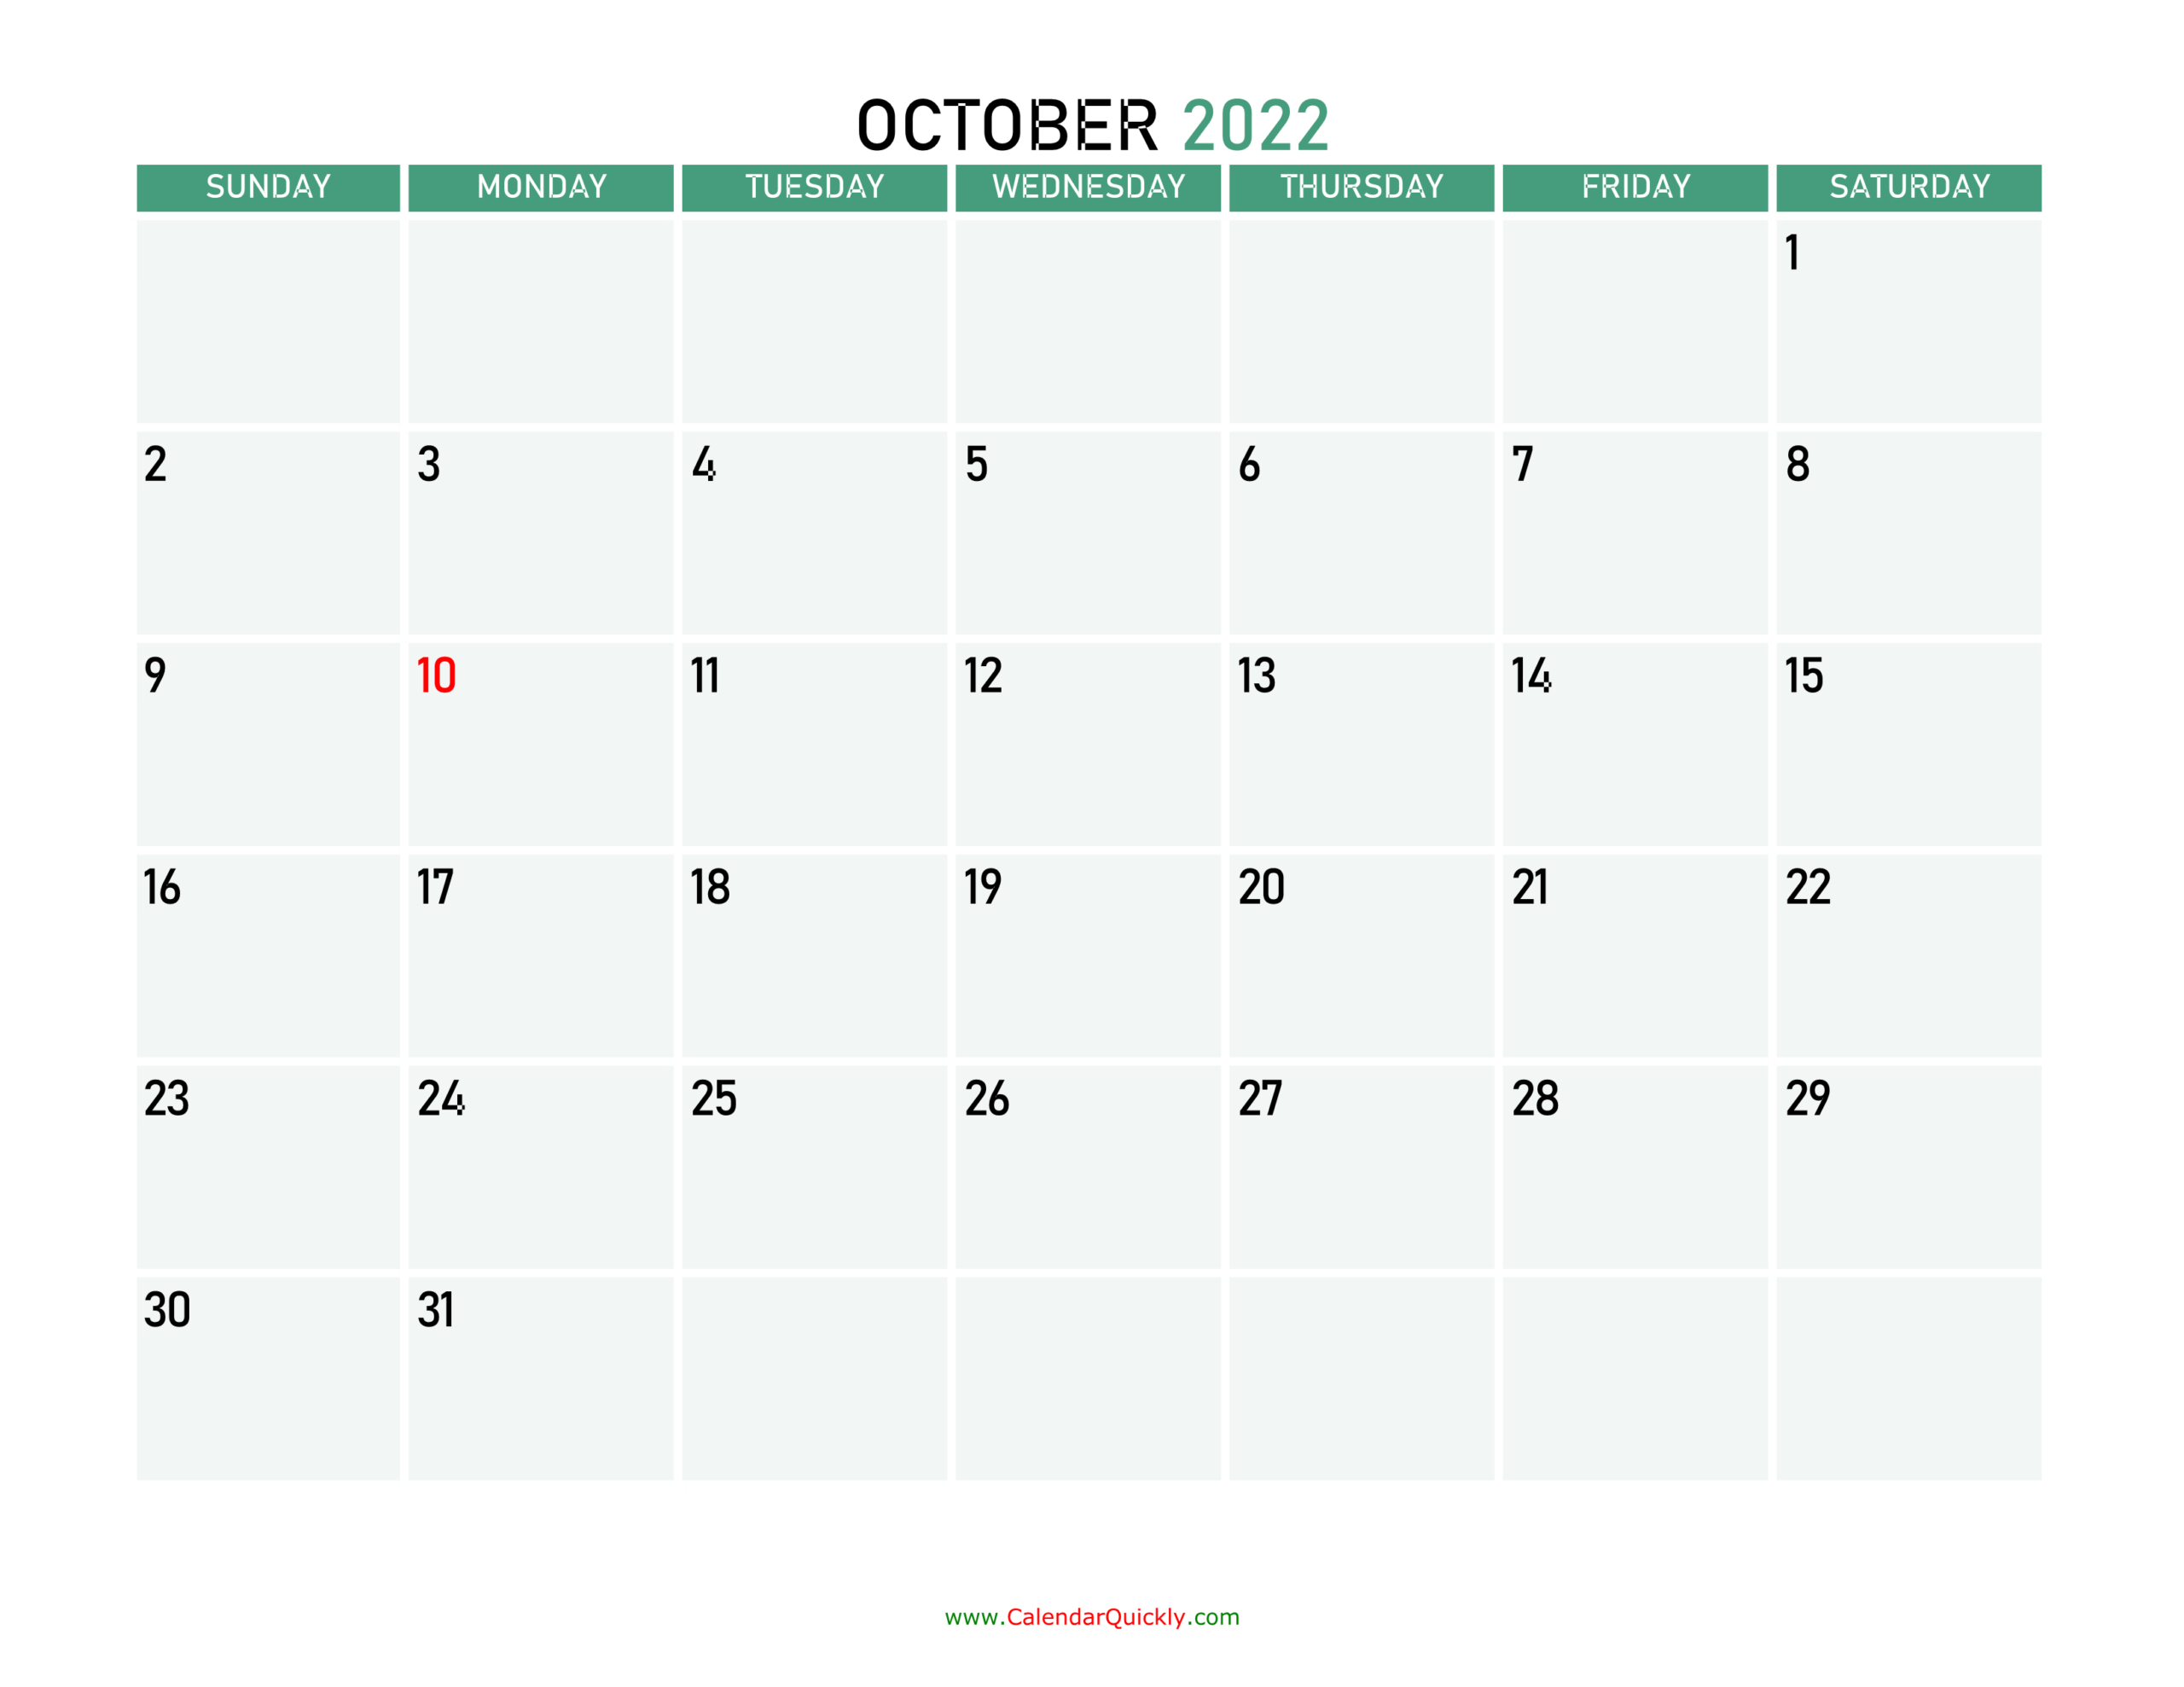 Get October 2022 Blank Calendar